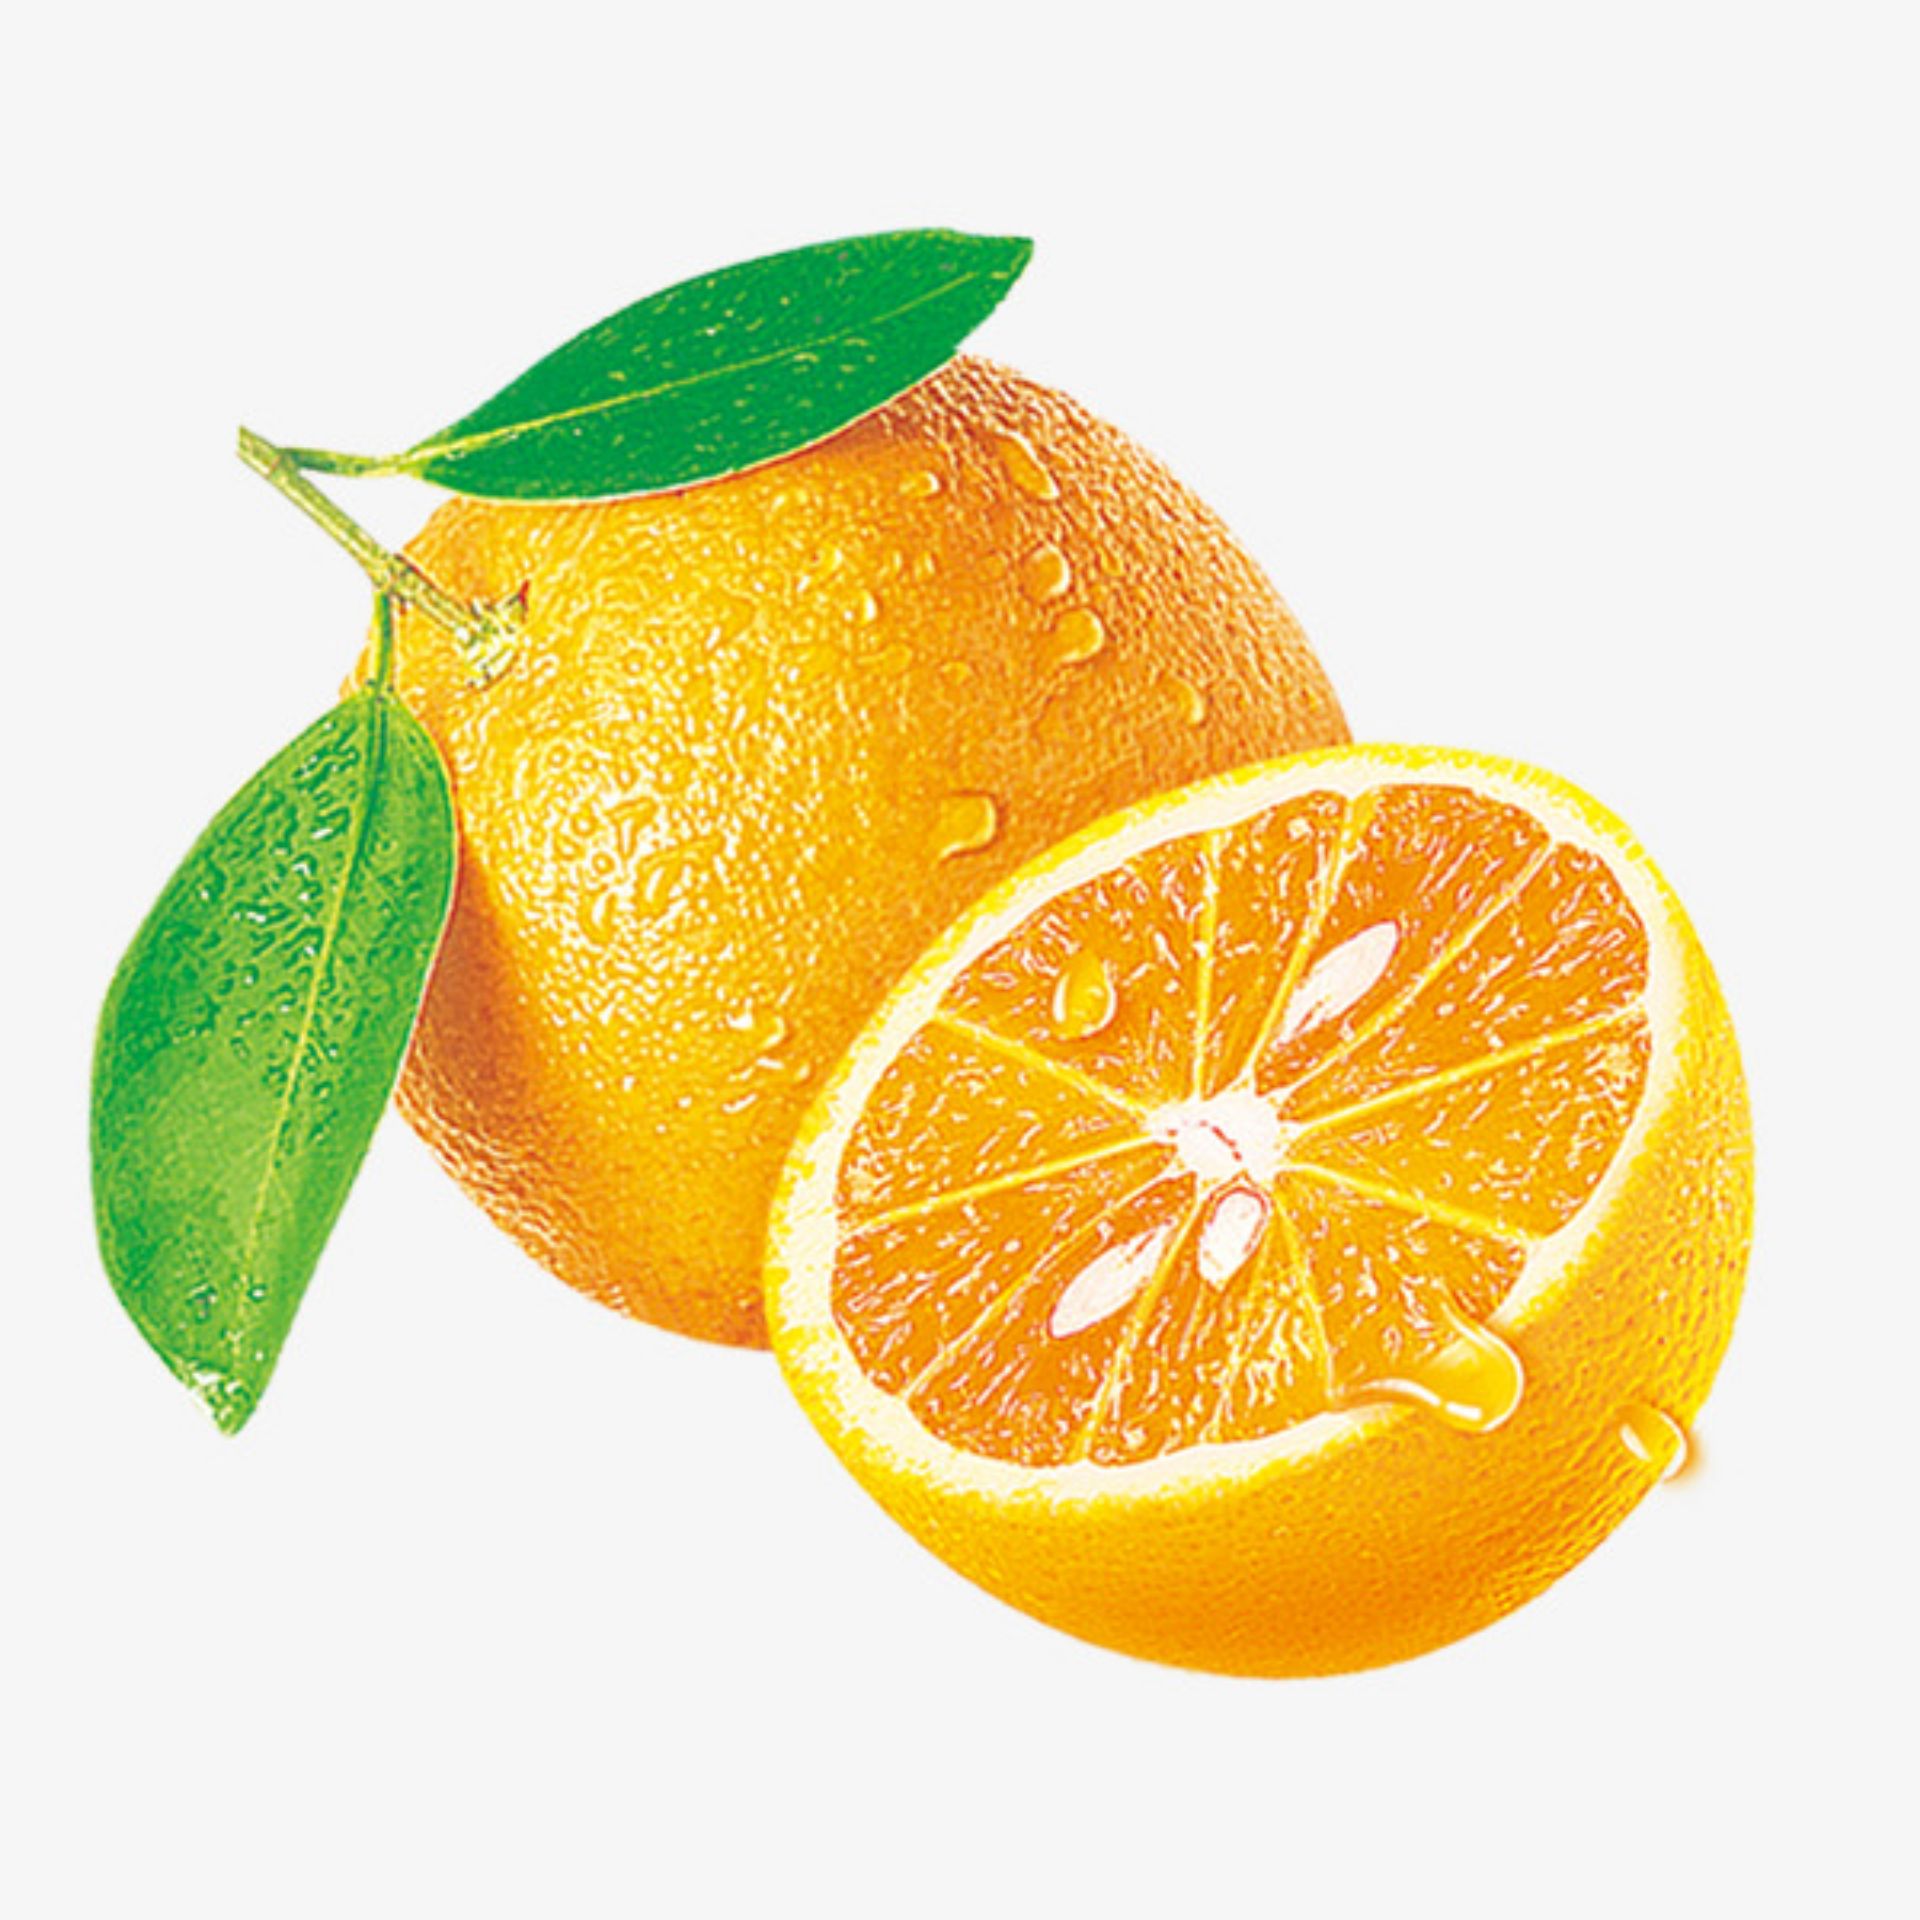 Лимон и апельсин на белом фоне